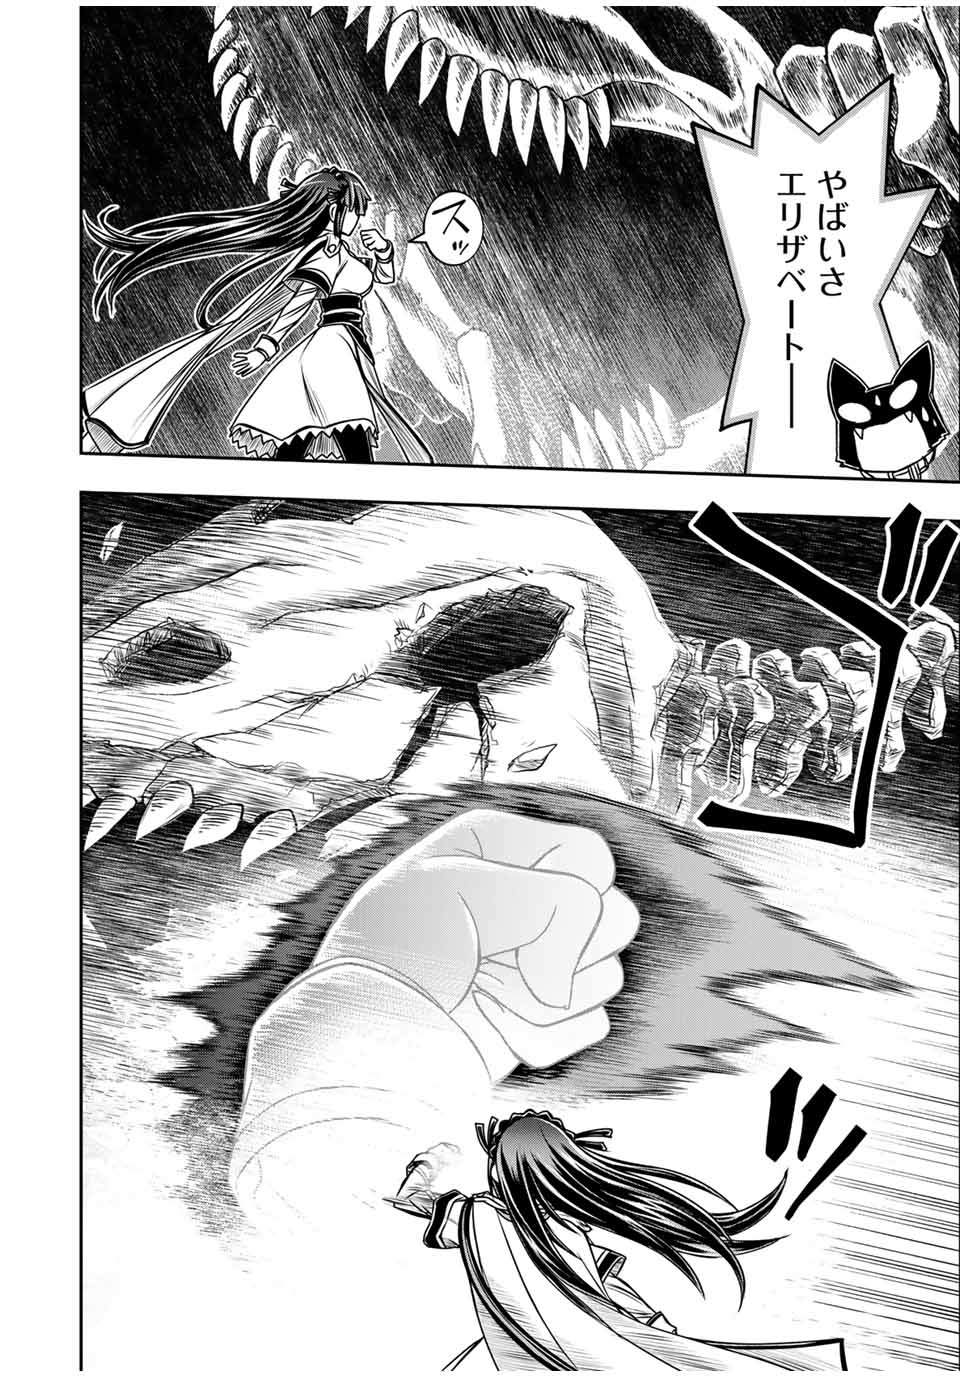 Nengan no Akuyaku Reijou (Last Boss) no Karada wo Teniiretazo!  - Chapter 22 - Page 6